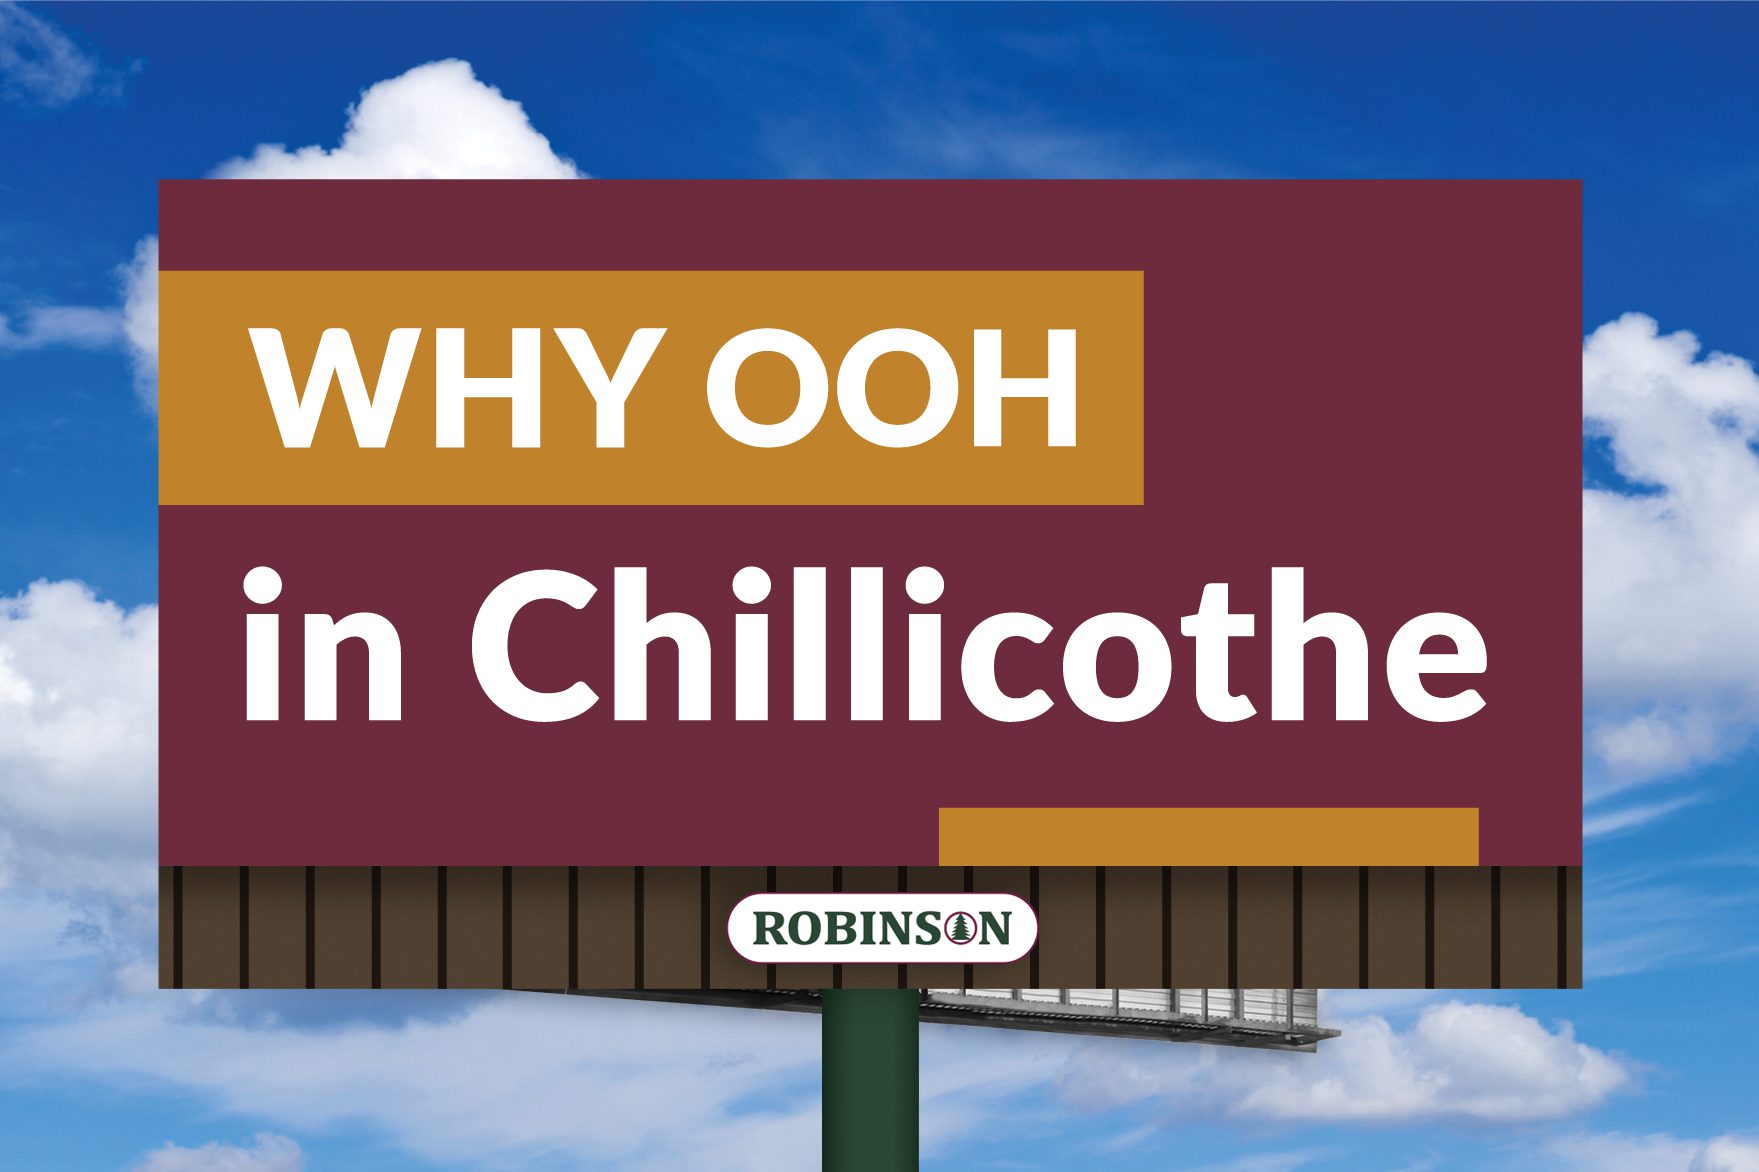 Chillicothe, Missouri digital billboard advertising